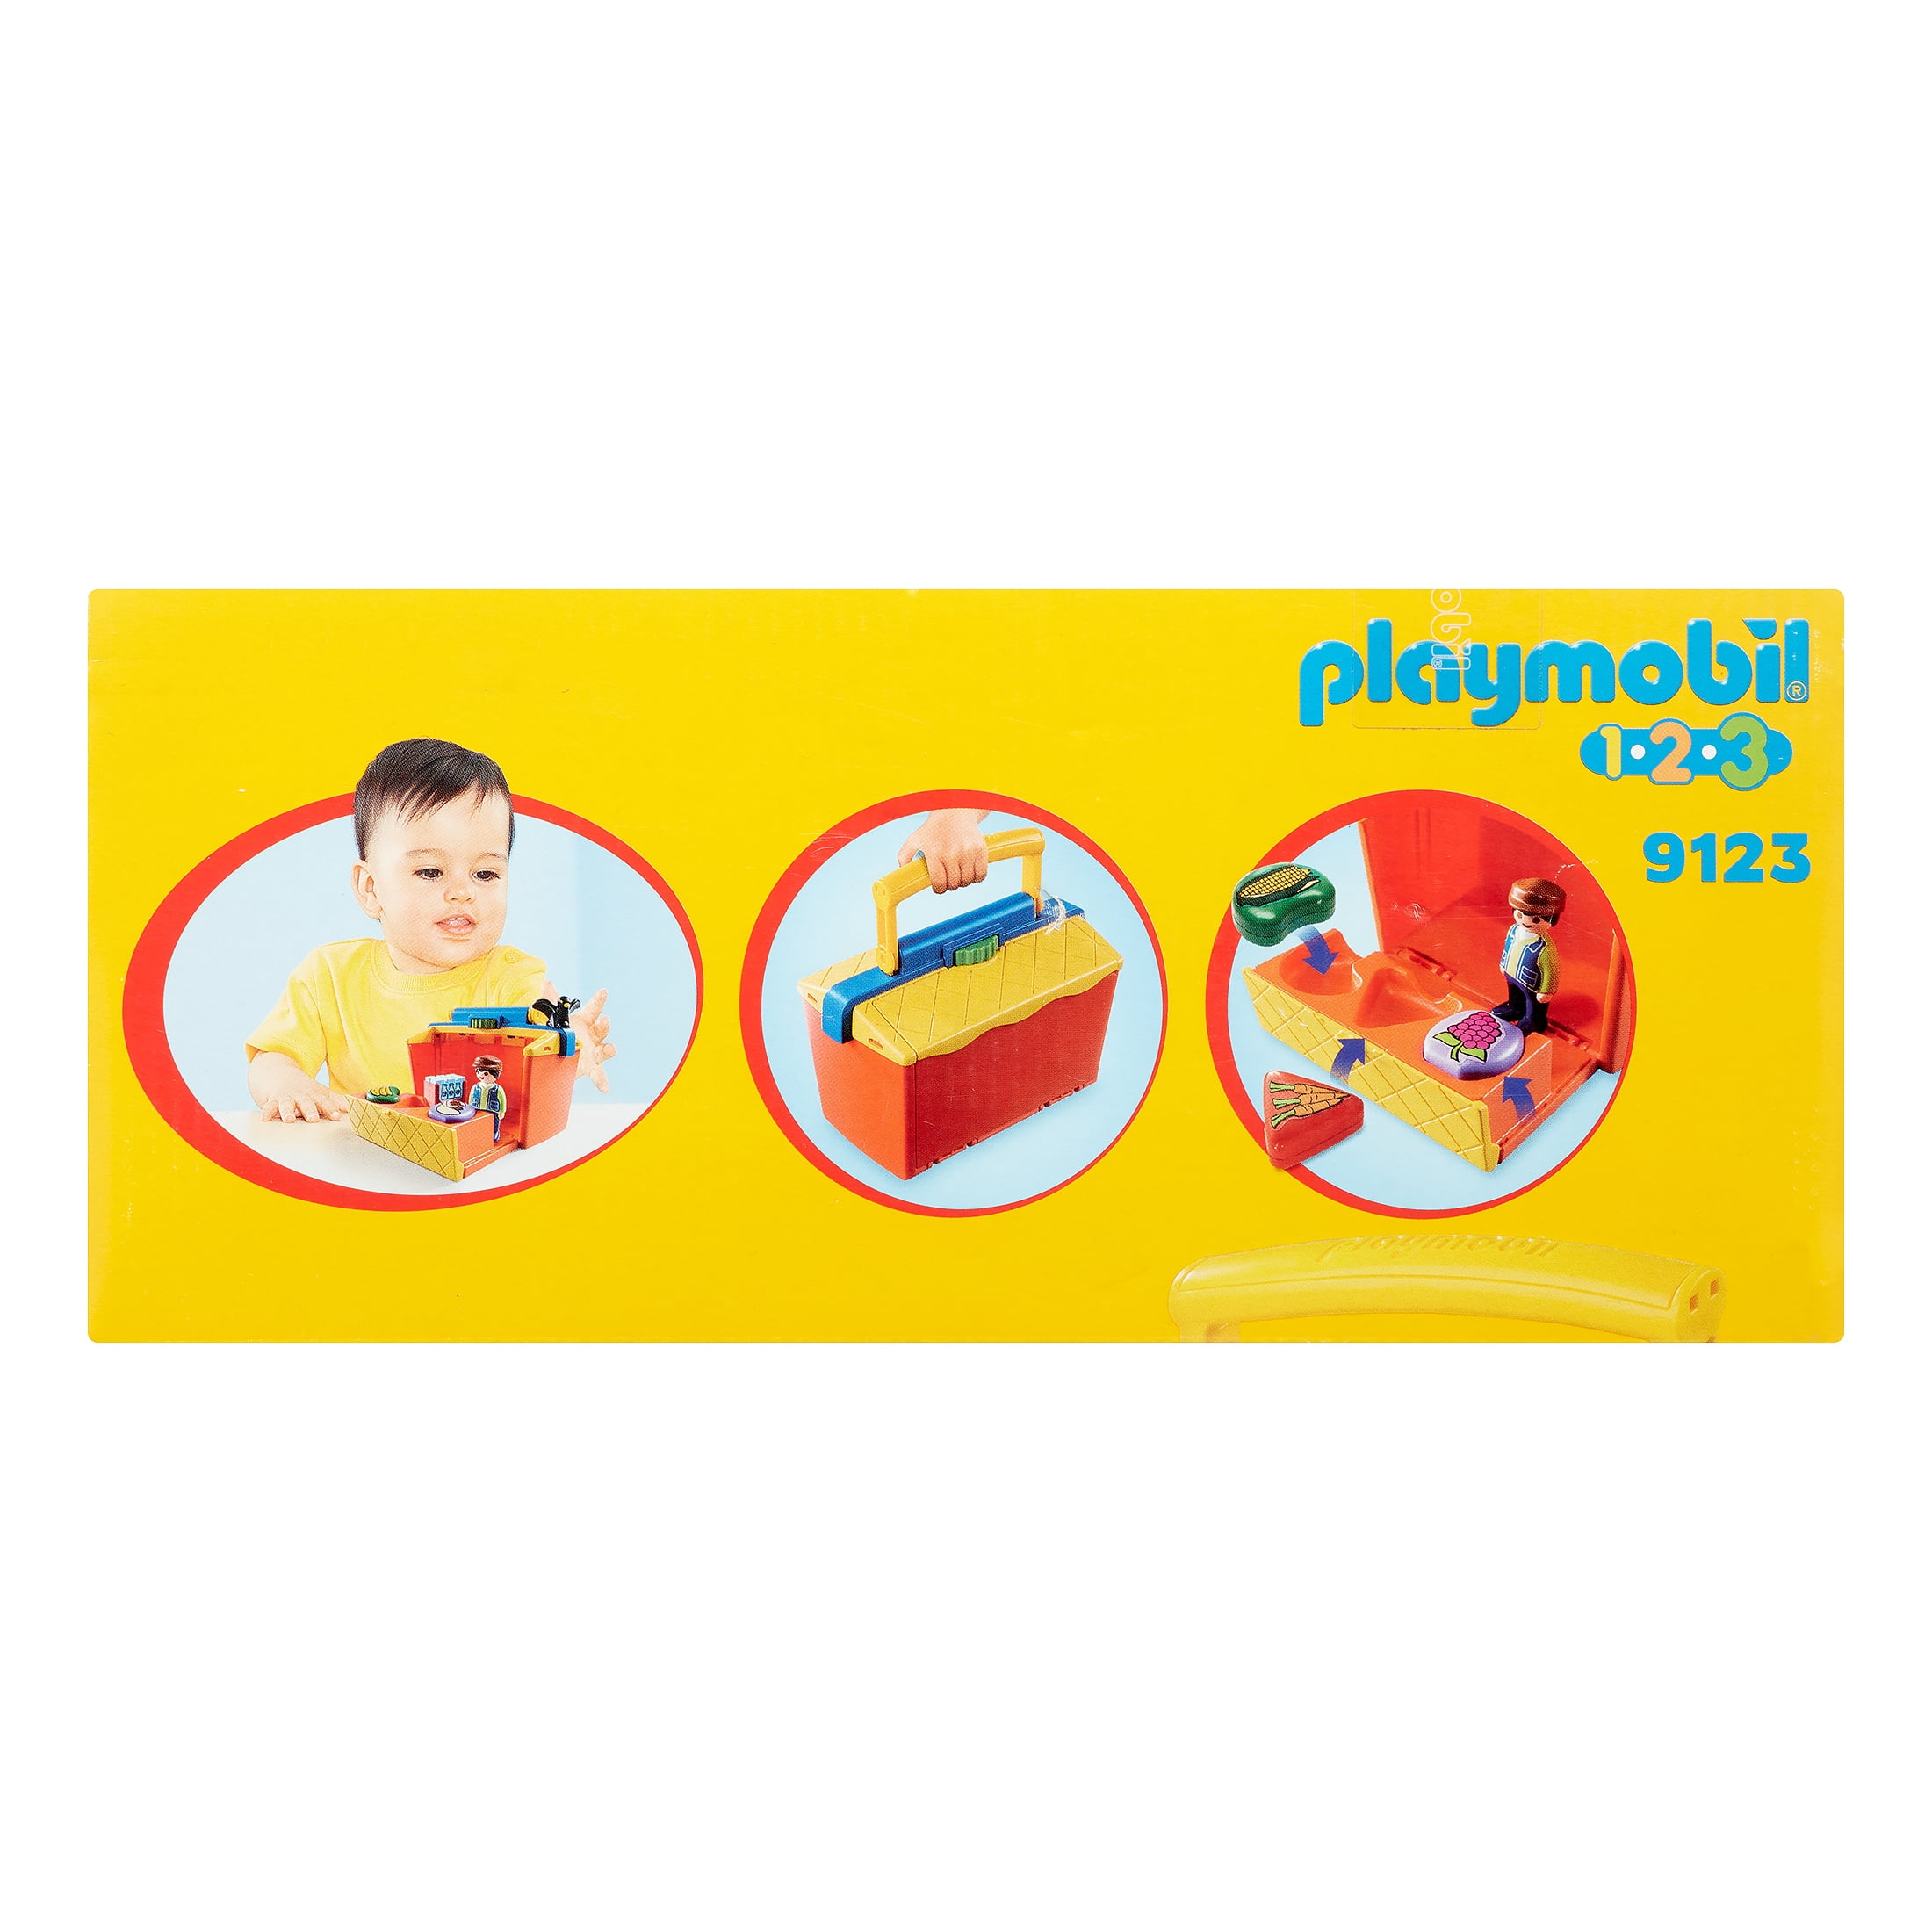 Playmobil accessorie bread nice for 3666 5300 5303 5142 5574 etc etc 